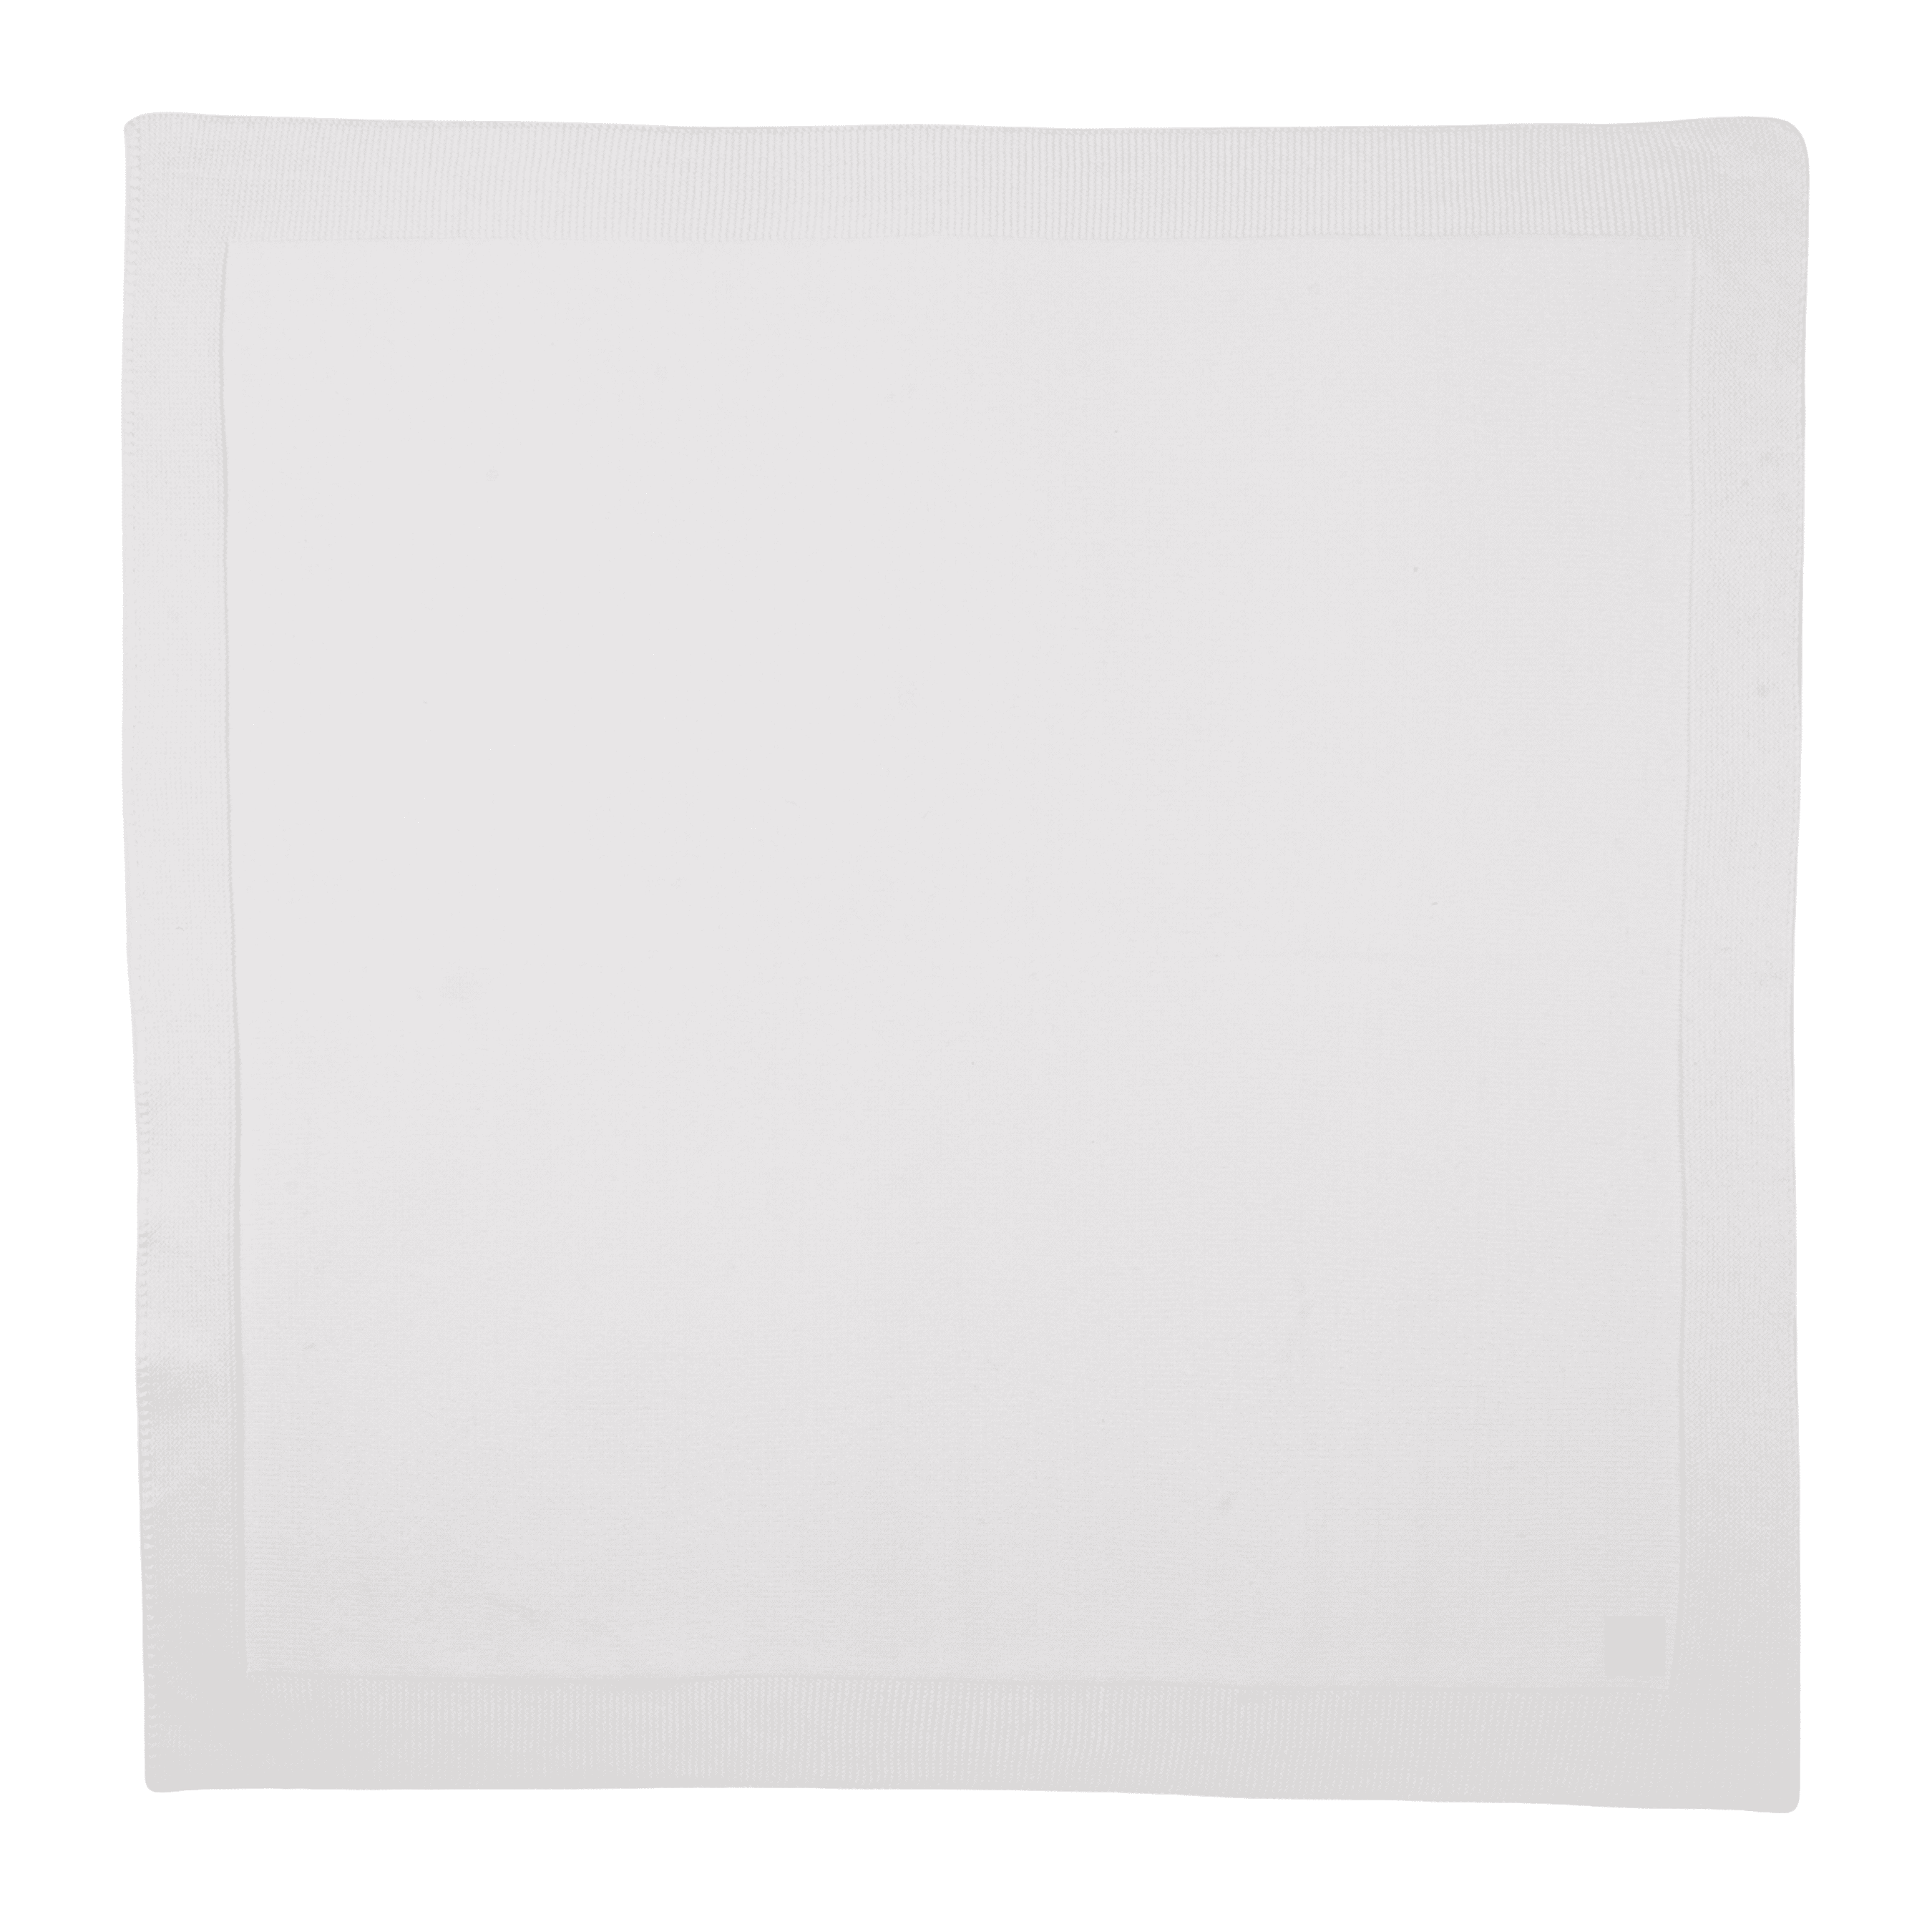 Petit Sweeny Gift Box | Baby White Organic Cotton Knit Set (6)